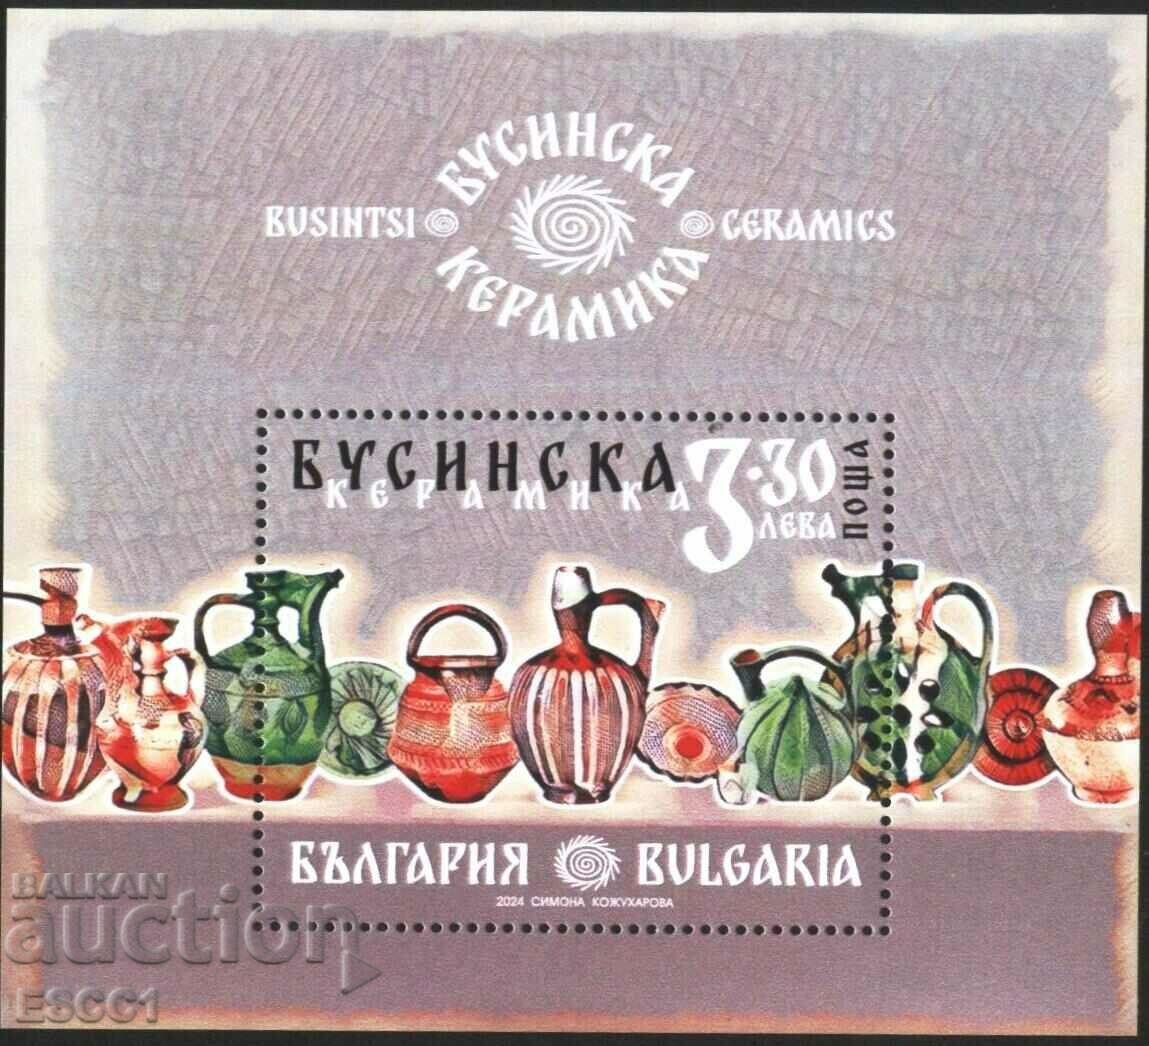 Pure Businska Ceramica 2024 from Bulgaria